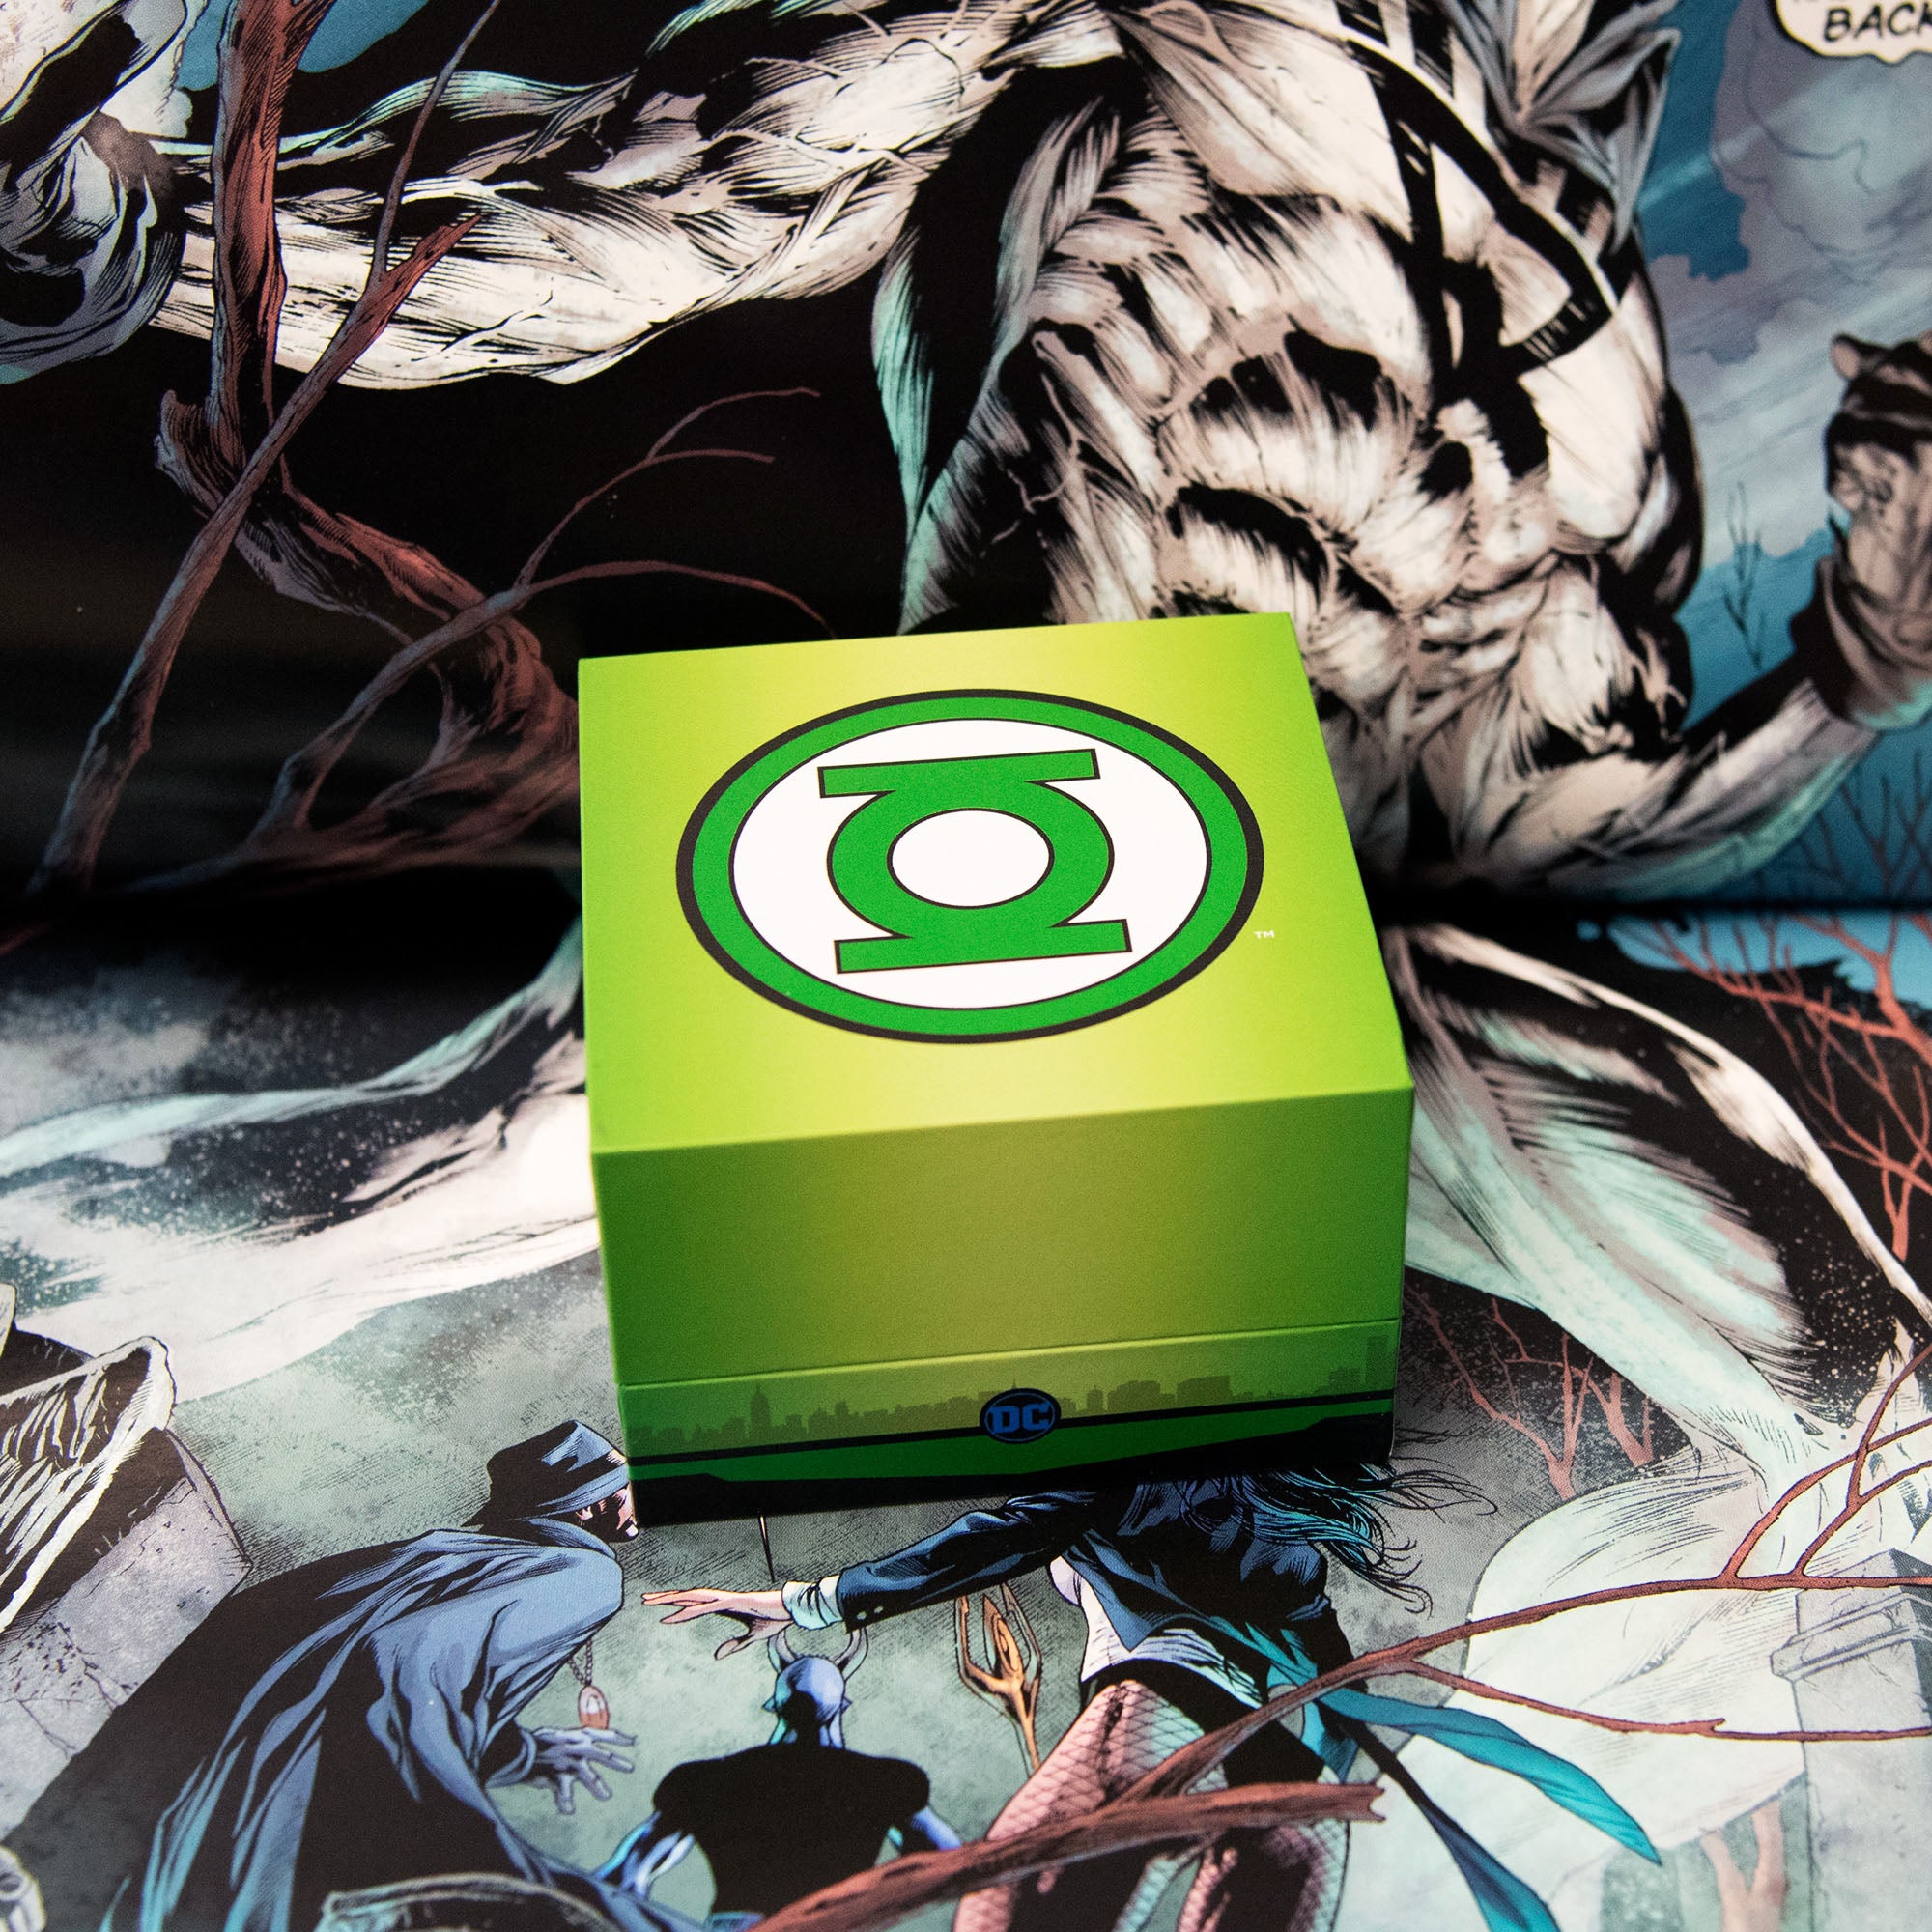 DC Comics Green Lantern "Death" Symbol Stainless Steel Ring